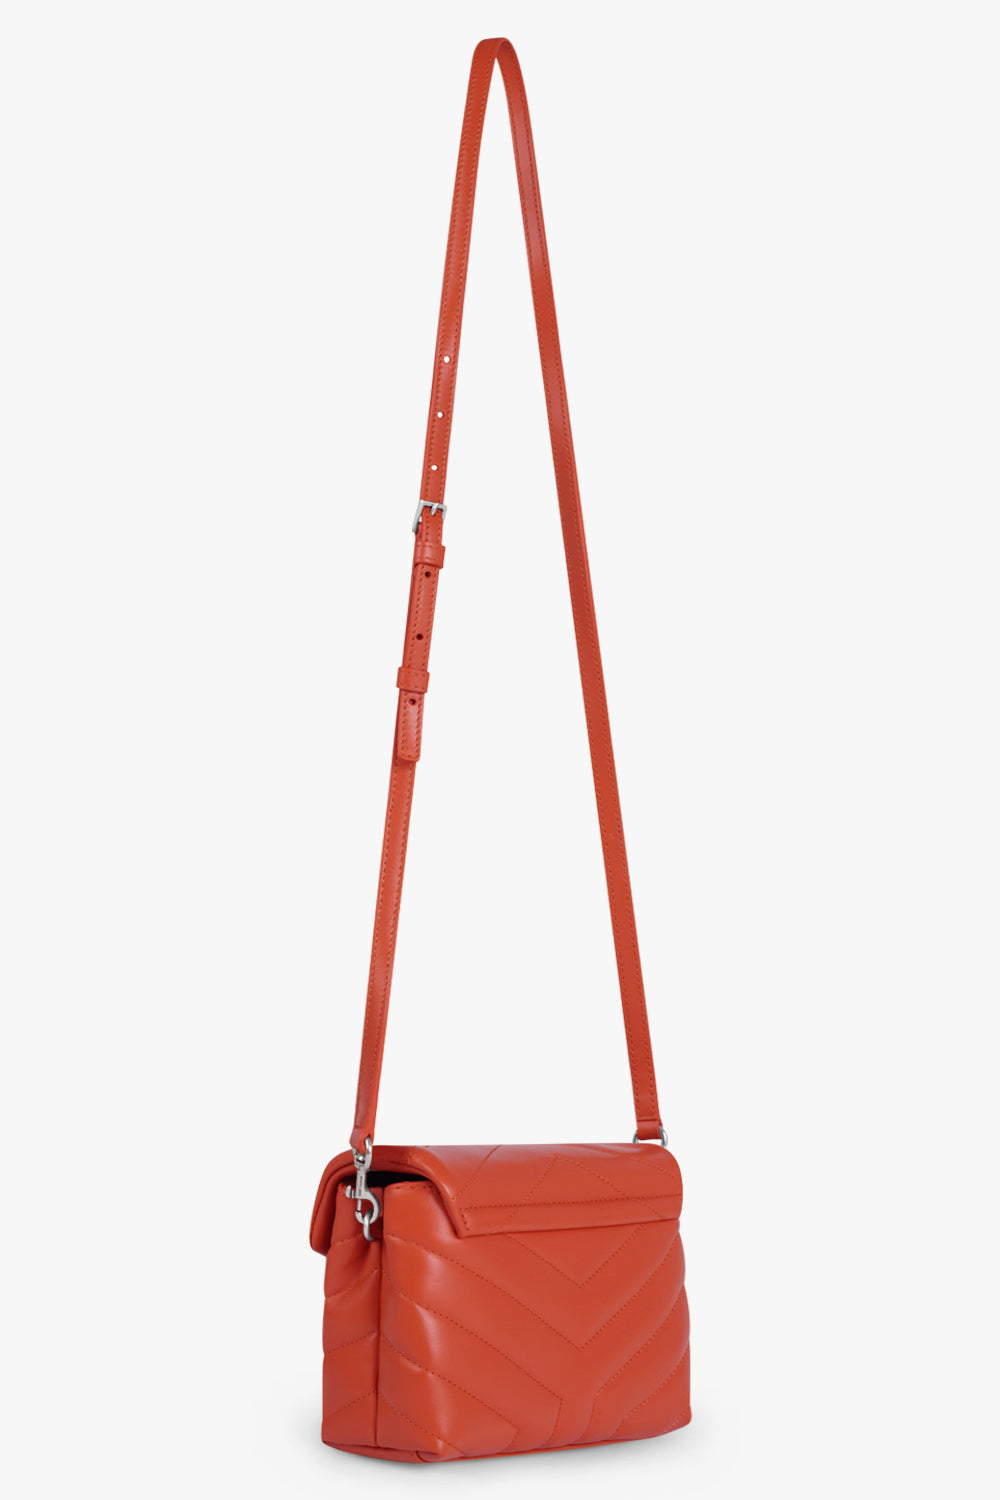 SAINT LAURENT BAGS RED LOULOU TOY FLAP BAG ADJUSTABLE STRAP | RED ORANGE/SILVER